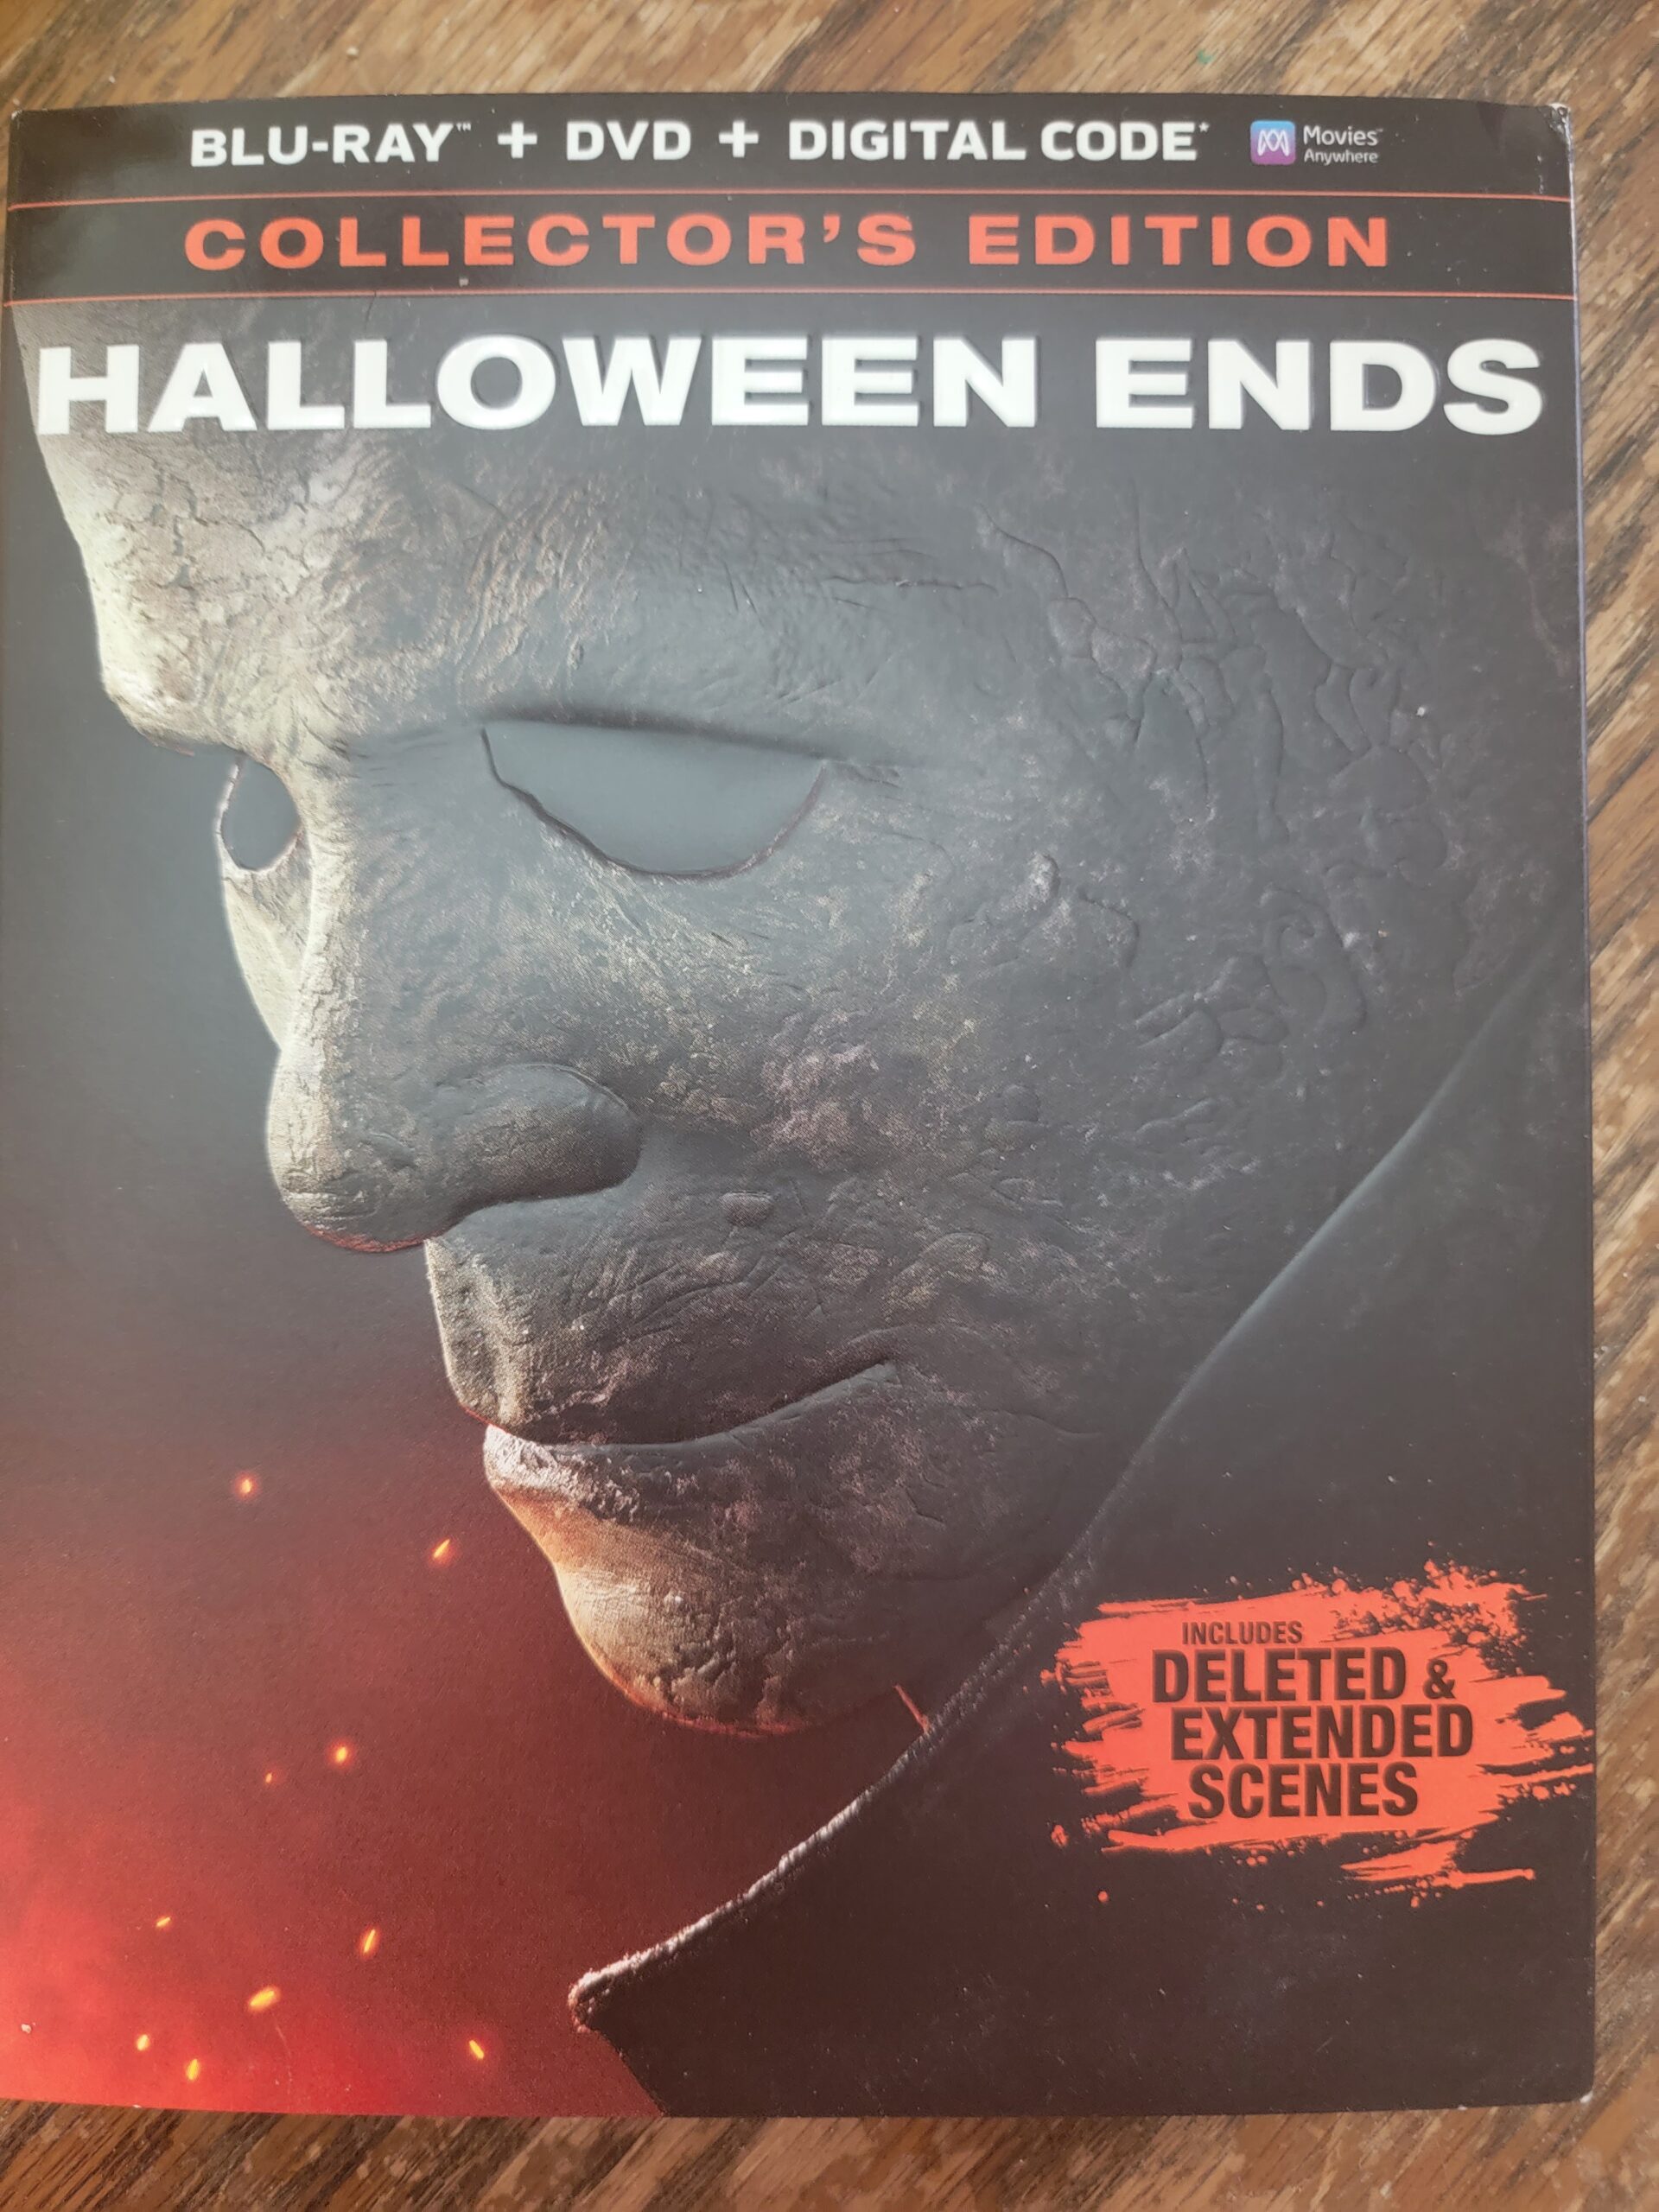 DVD - Halloween Kills - O Terror Continua